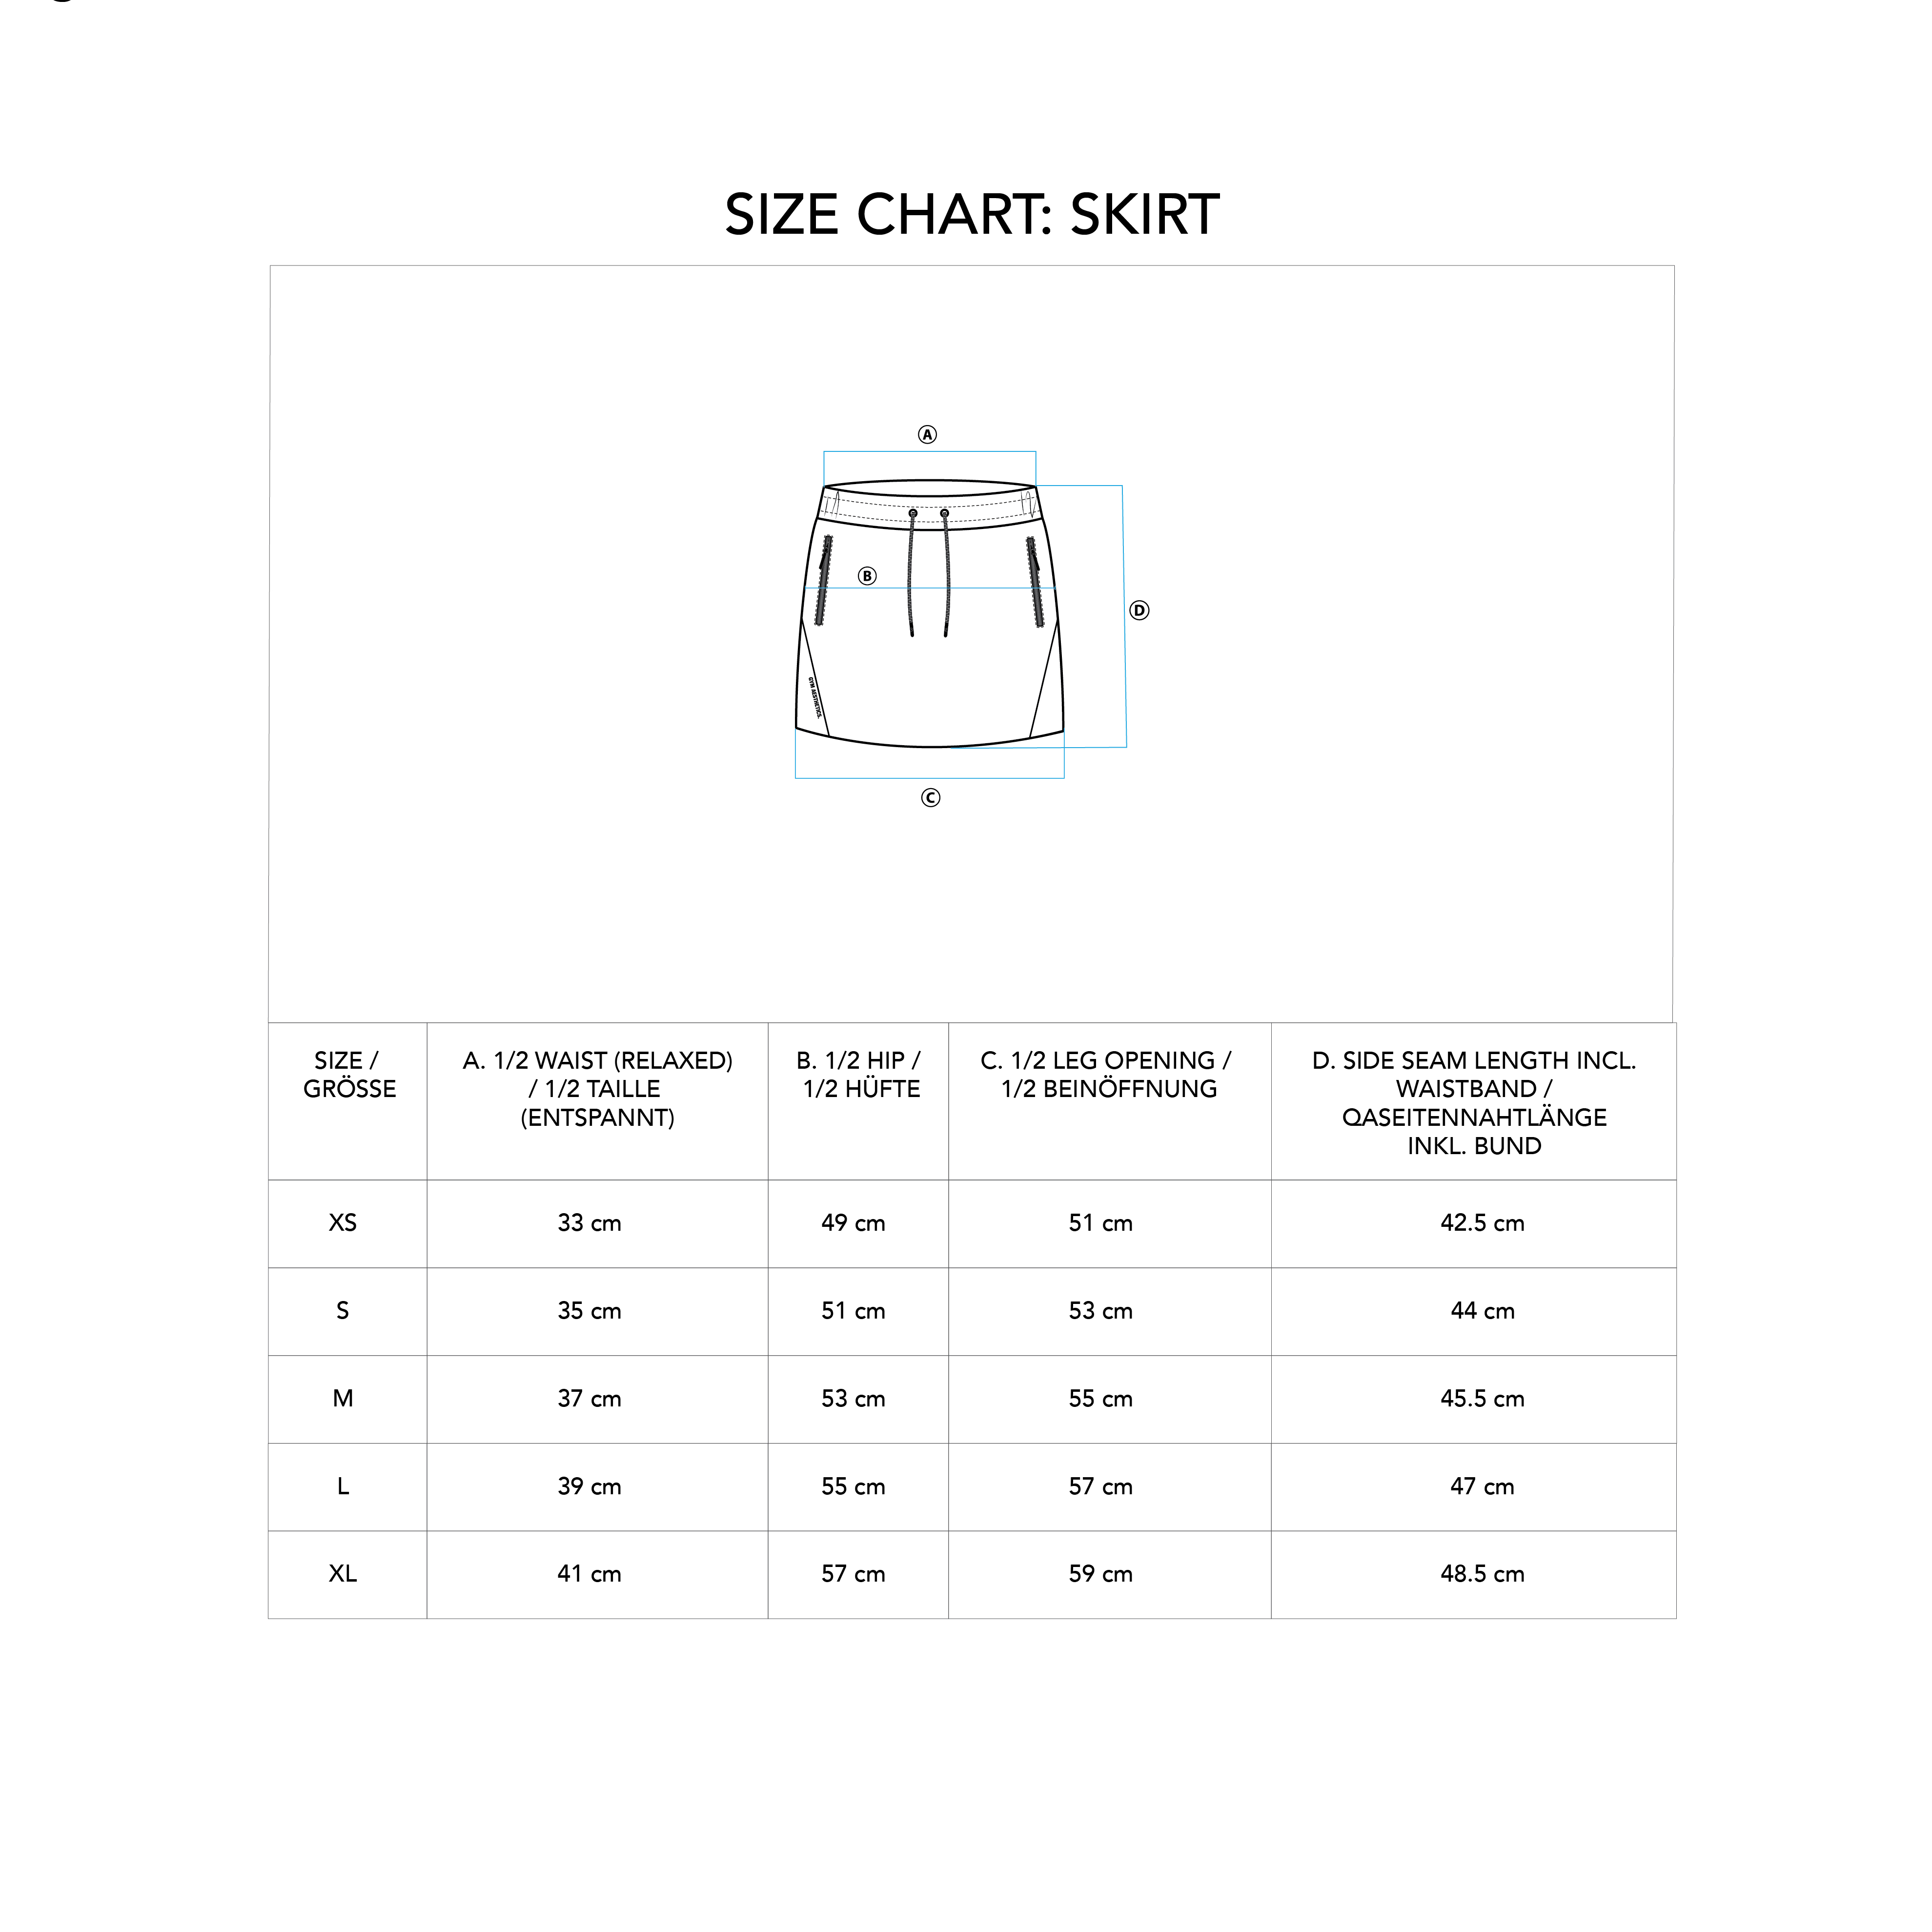 Athleisure Ergonomics Skirt for Women - size chart